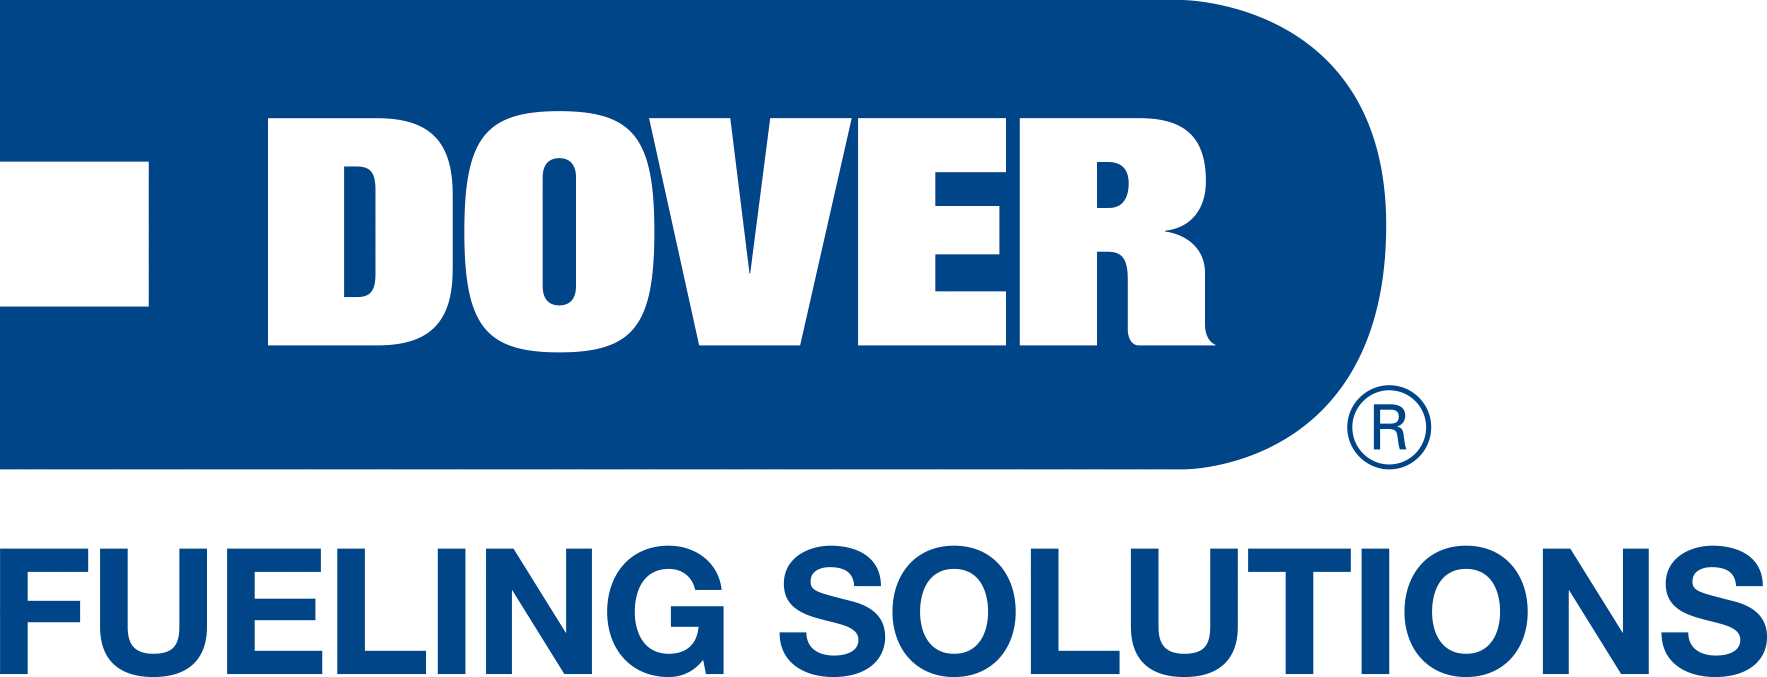 dover-fueling-solutions-logo.original